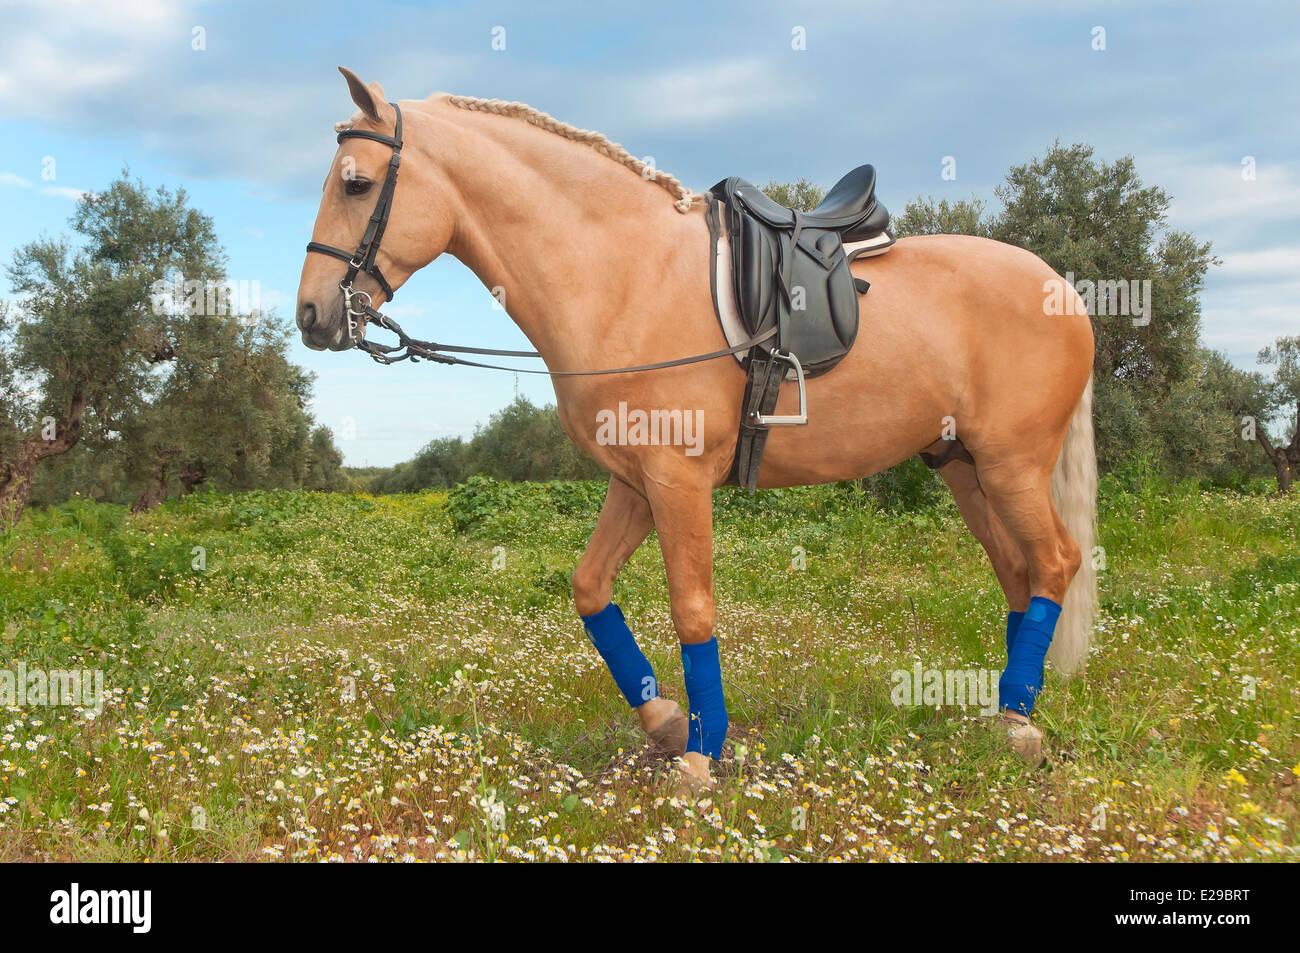 Equestrian Center "El Acebuche" - Tan Pferd, Bollullos De La Mitacion, Provinz Sevilla, Region von Andalusien, Spanien, Europa Stockfoto